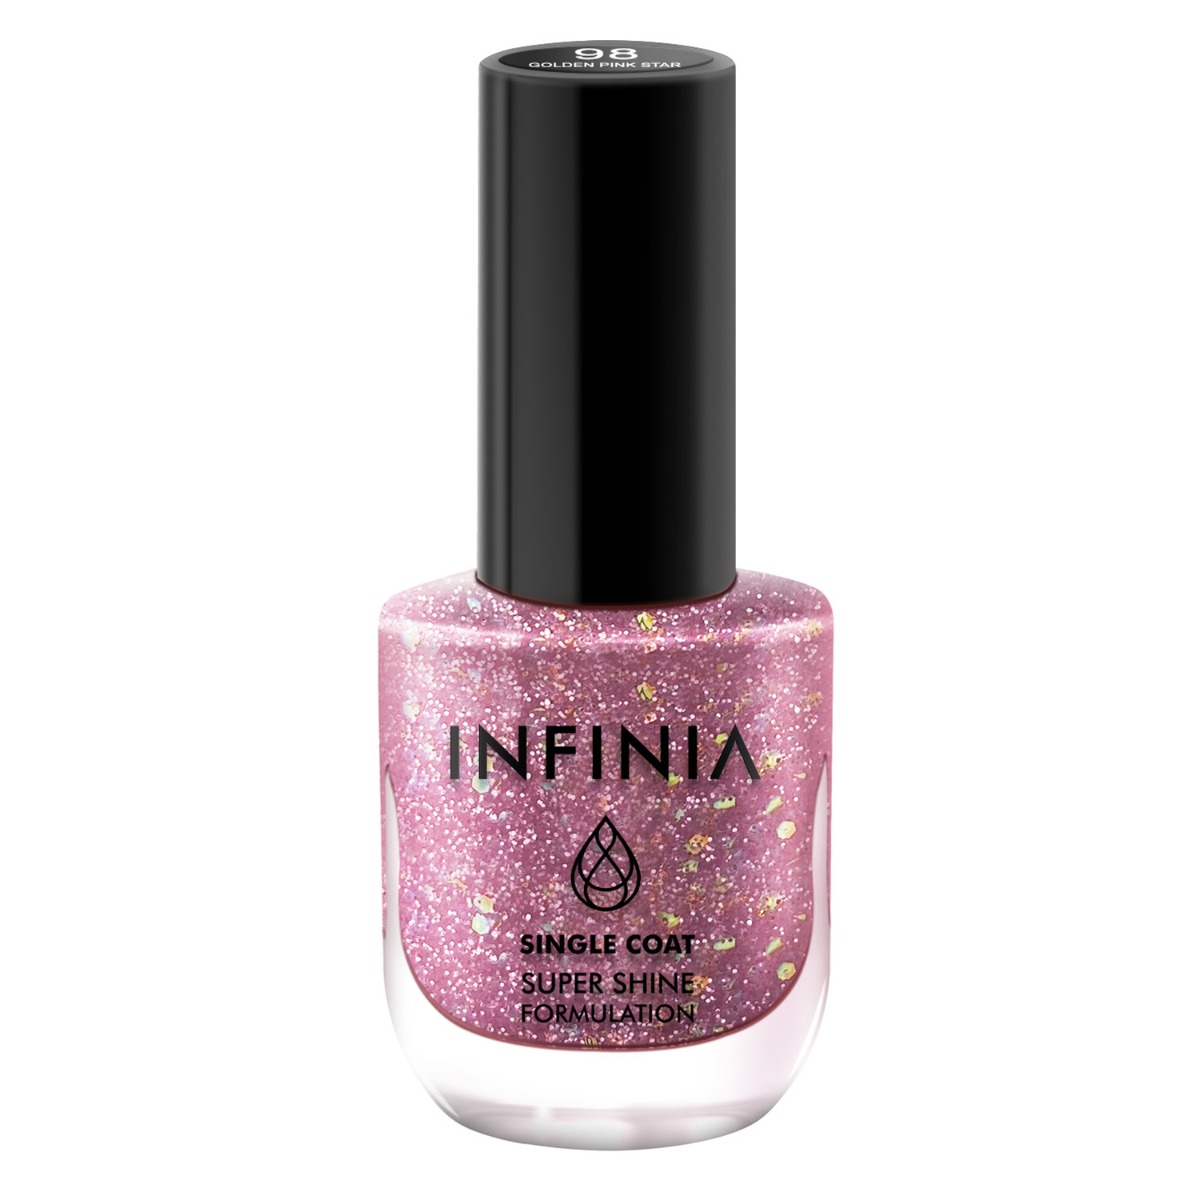 INFINIA Single Coat Super Shine Nail Polish With Ultra High Gloss, 12ml-098 Golden Pink Star